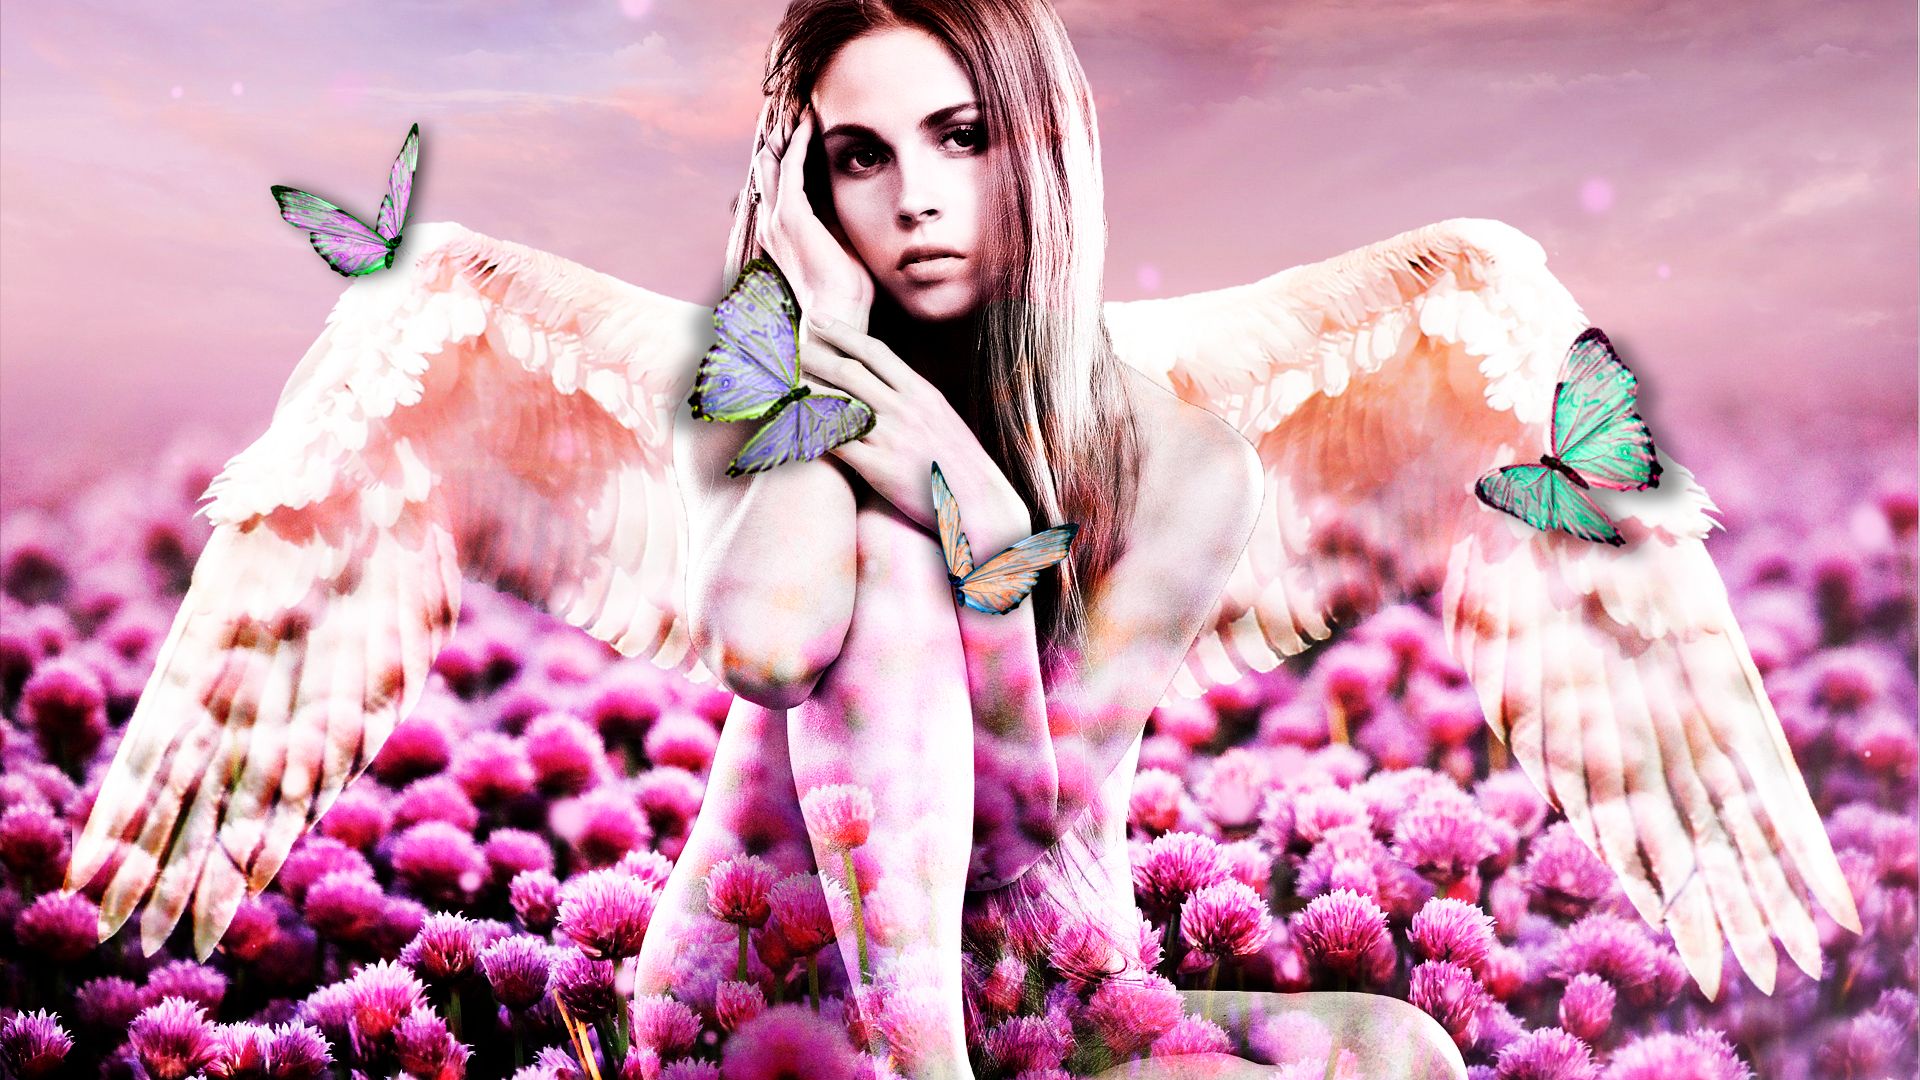 Angel de las mariposas 4.jpg